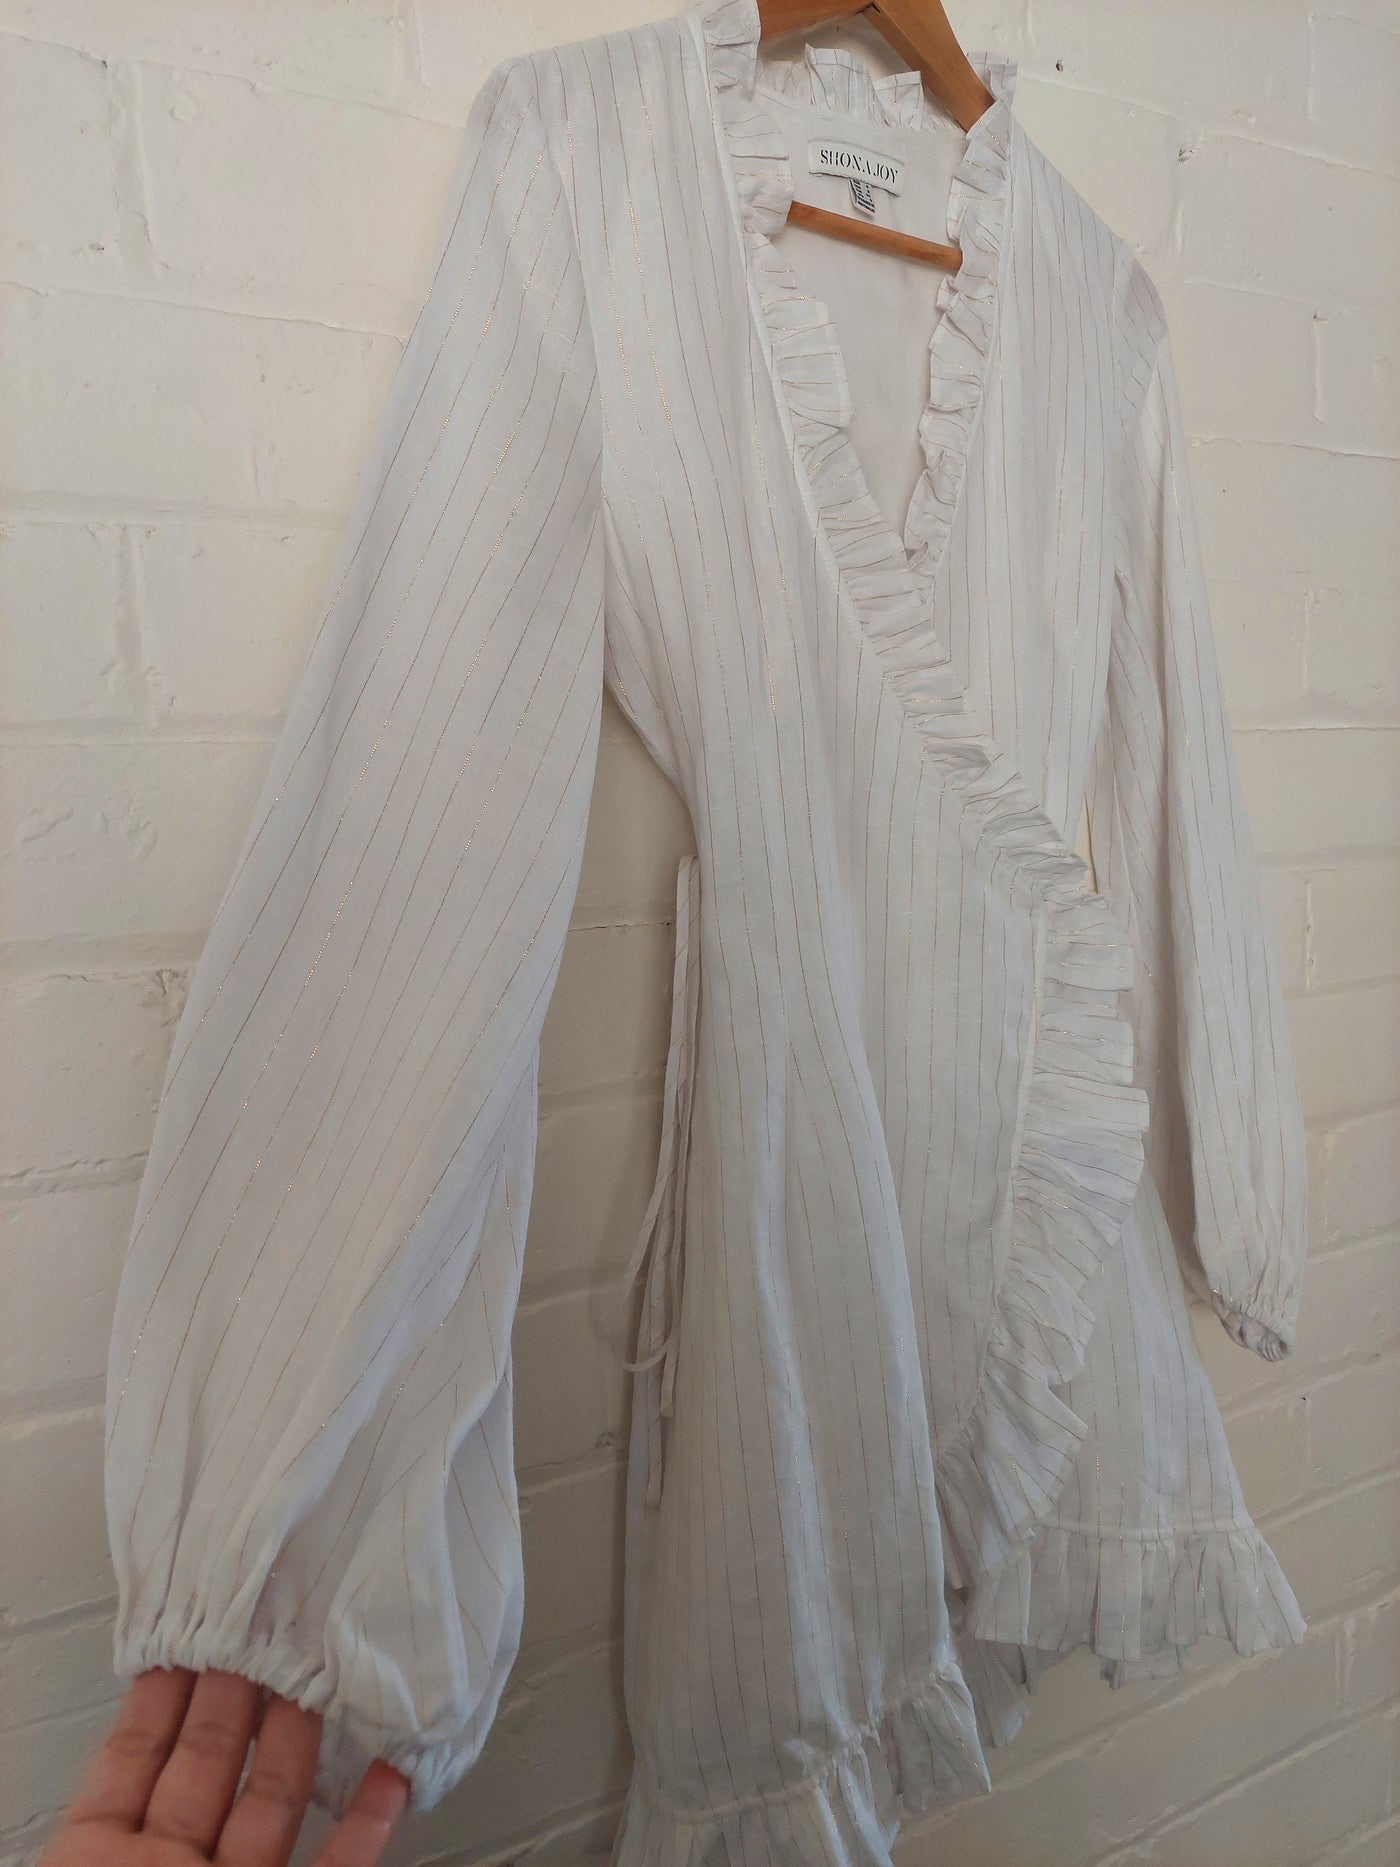 Shona Joy Holden Wrap Mini Dress - White / Gold, Size 6